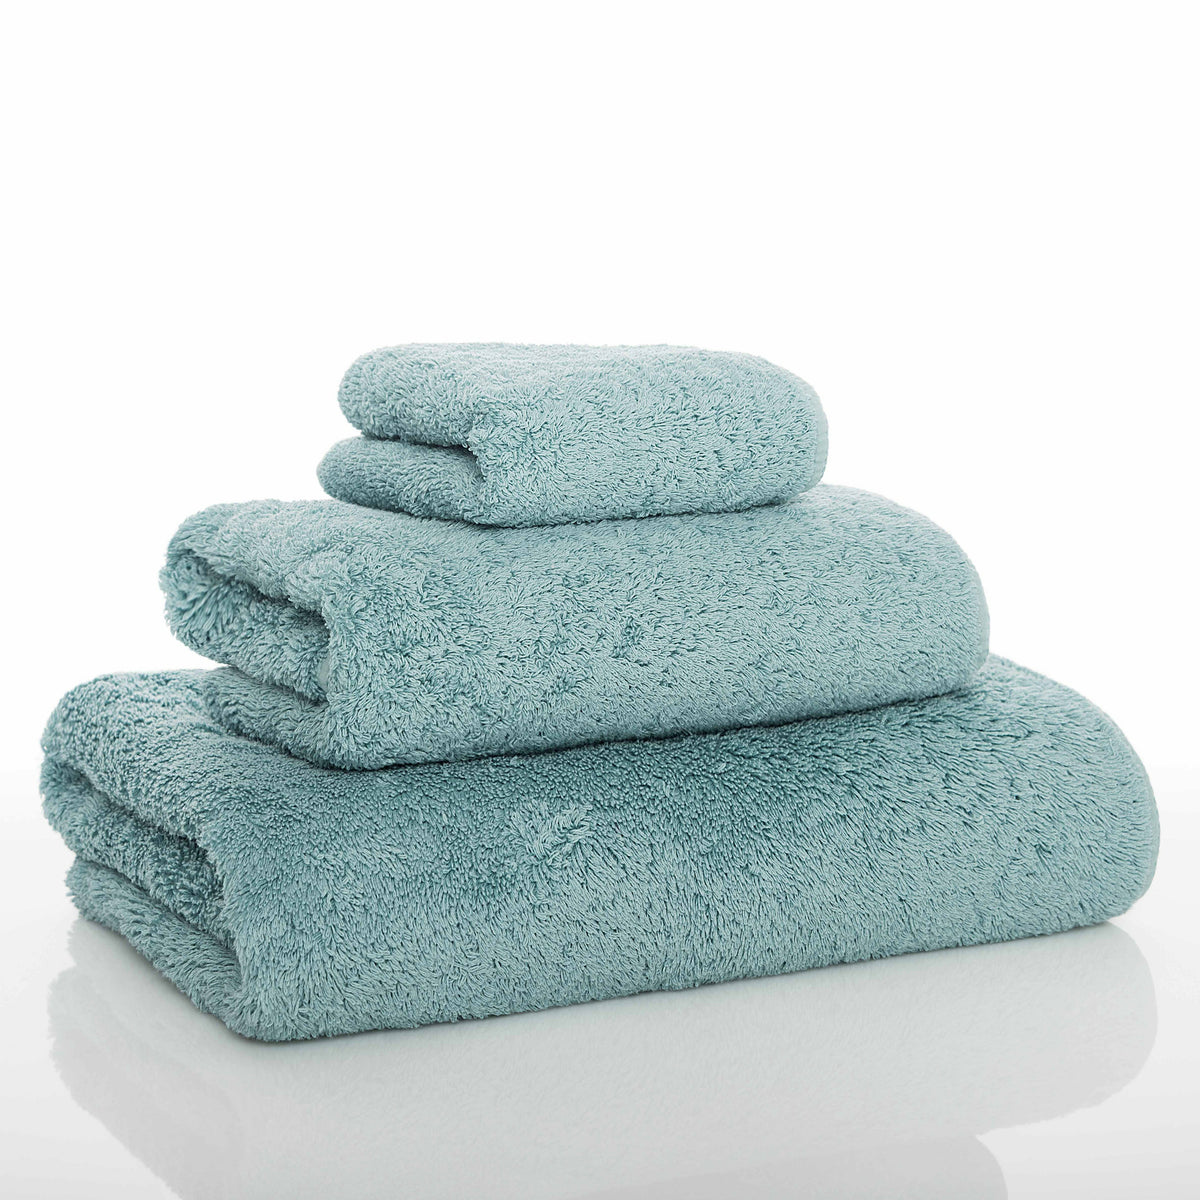 Luxury Hotel Plaza AirCore Bath Towels, Dillard's